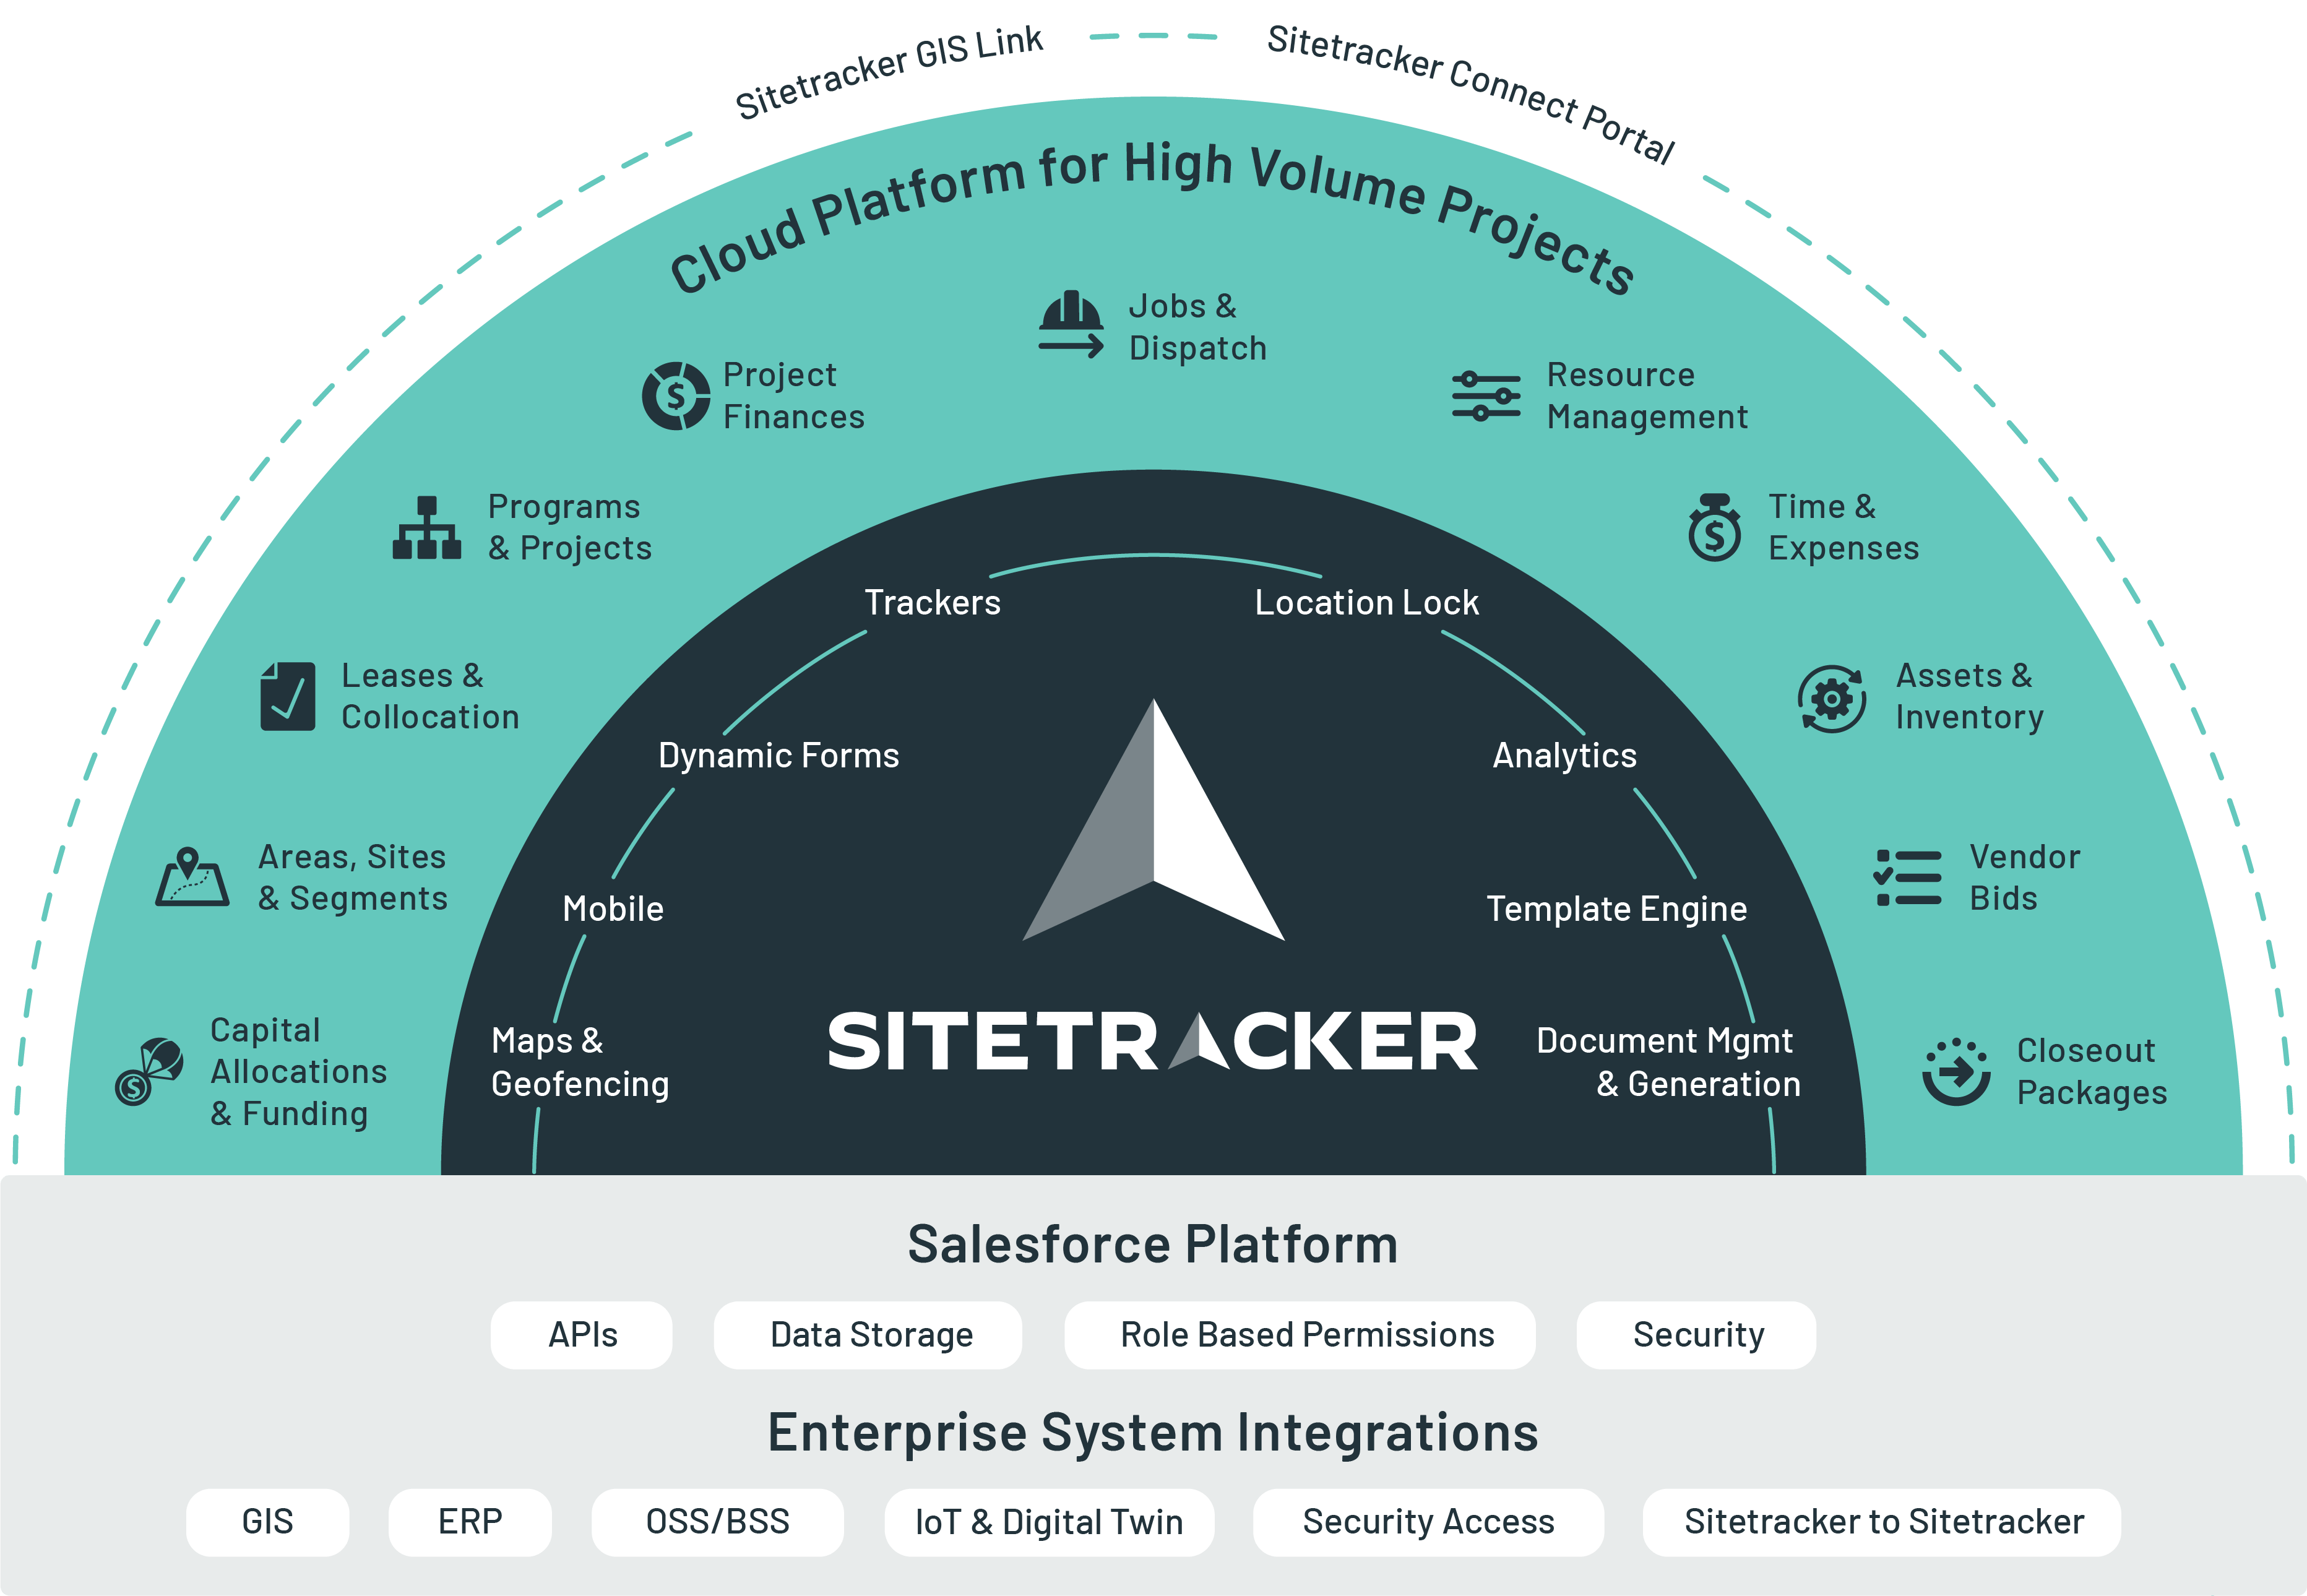 Sitetracker platform and integrations graphic